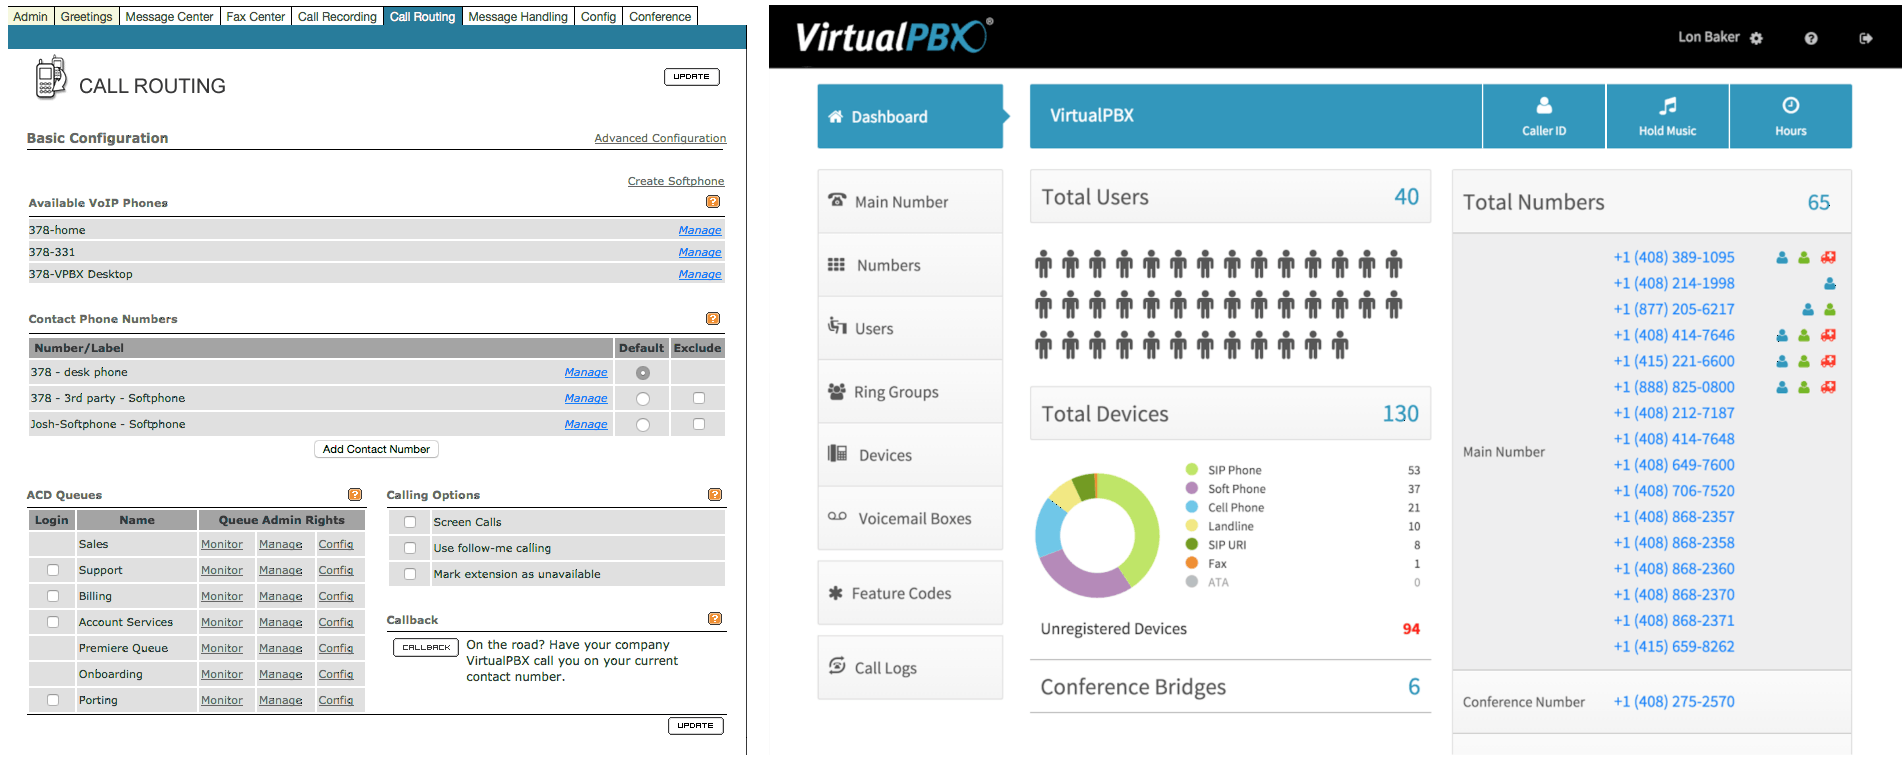 VirtualPBX Platforms Comparison